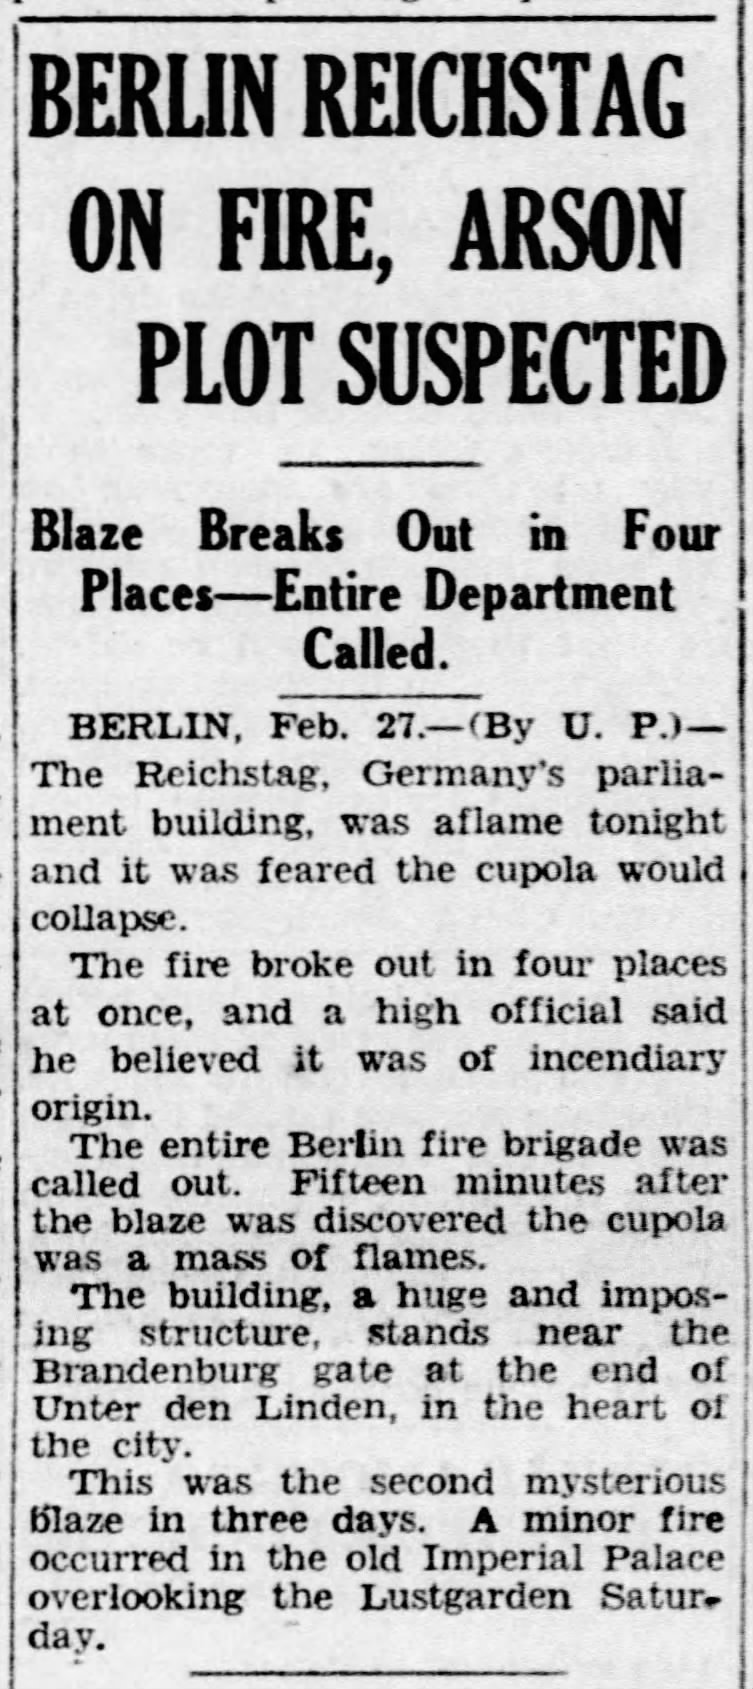 Berlin Reichstag on Fire, Arson Plot Suspected